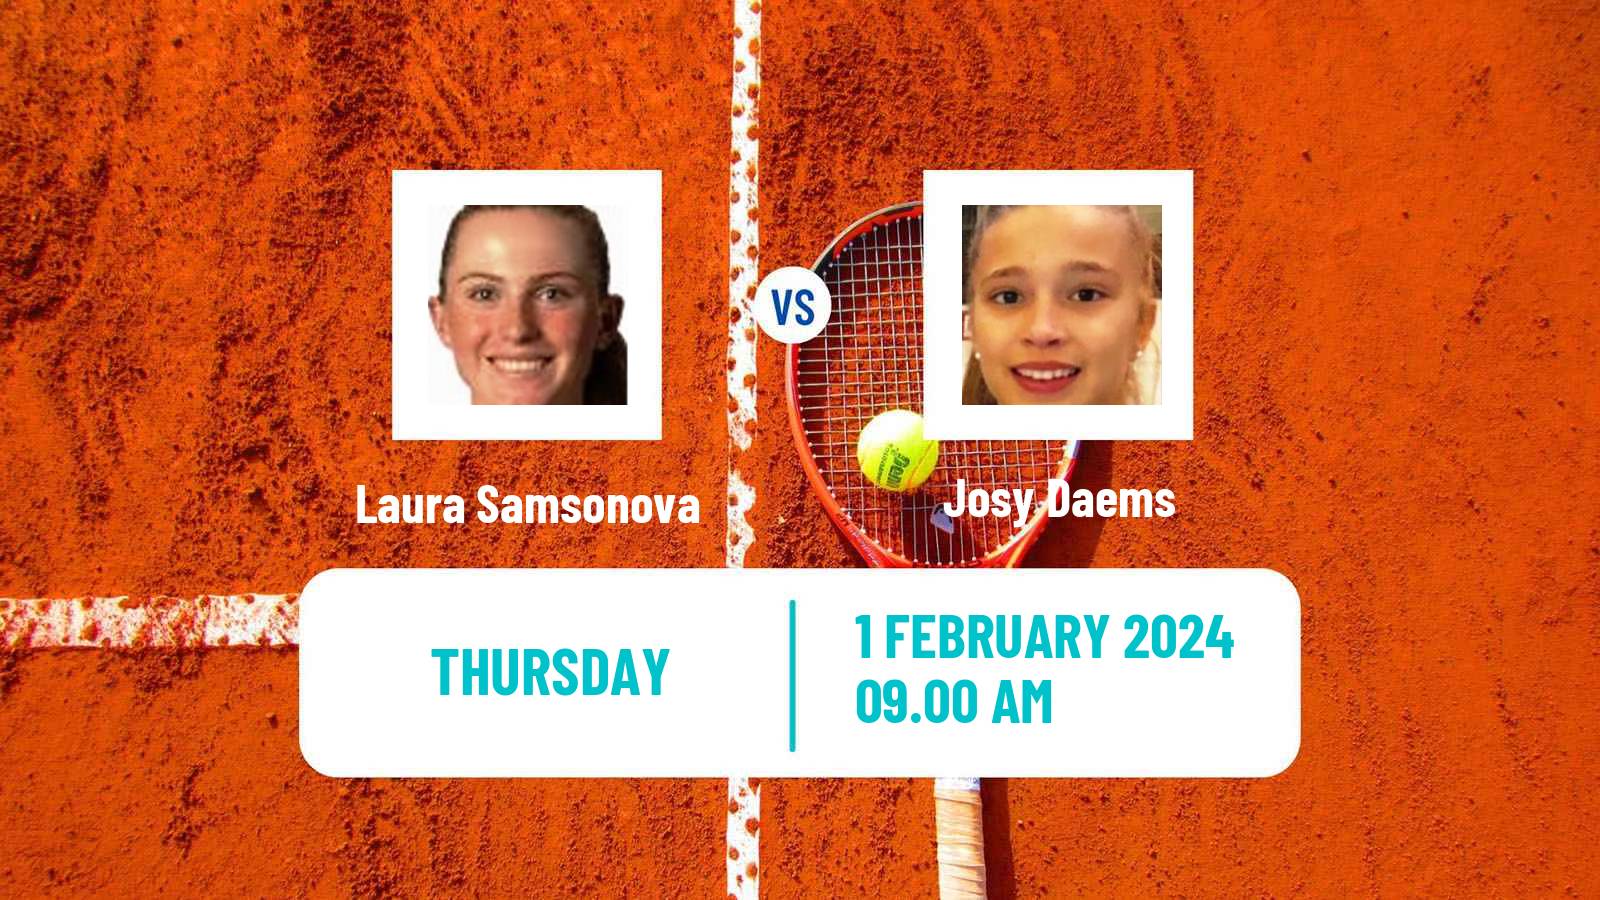 Tennis ITF W15 Monastir 3 Women Laura Samsonova - Josy Daems